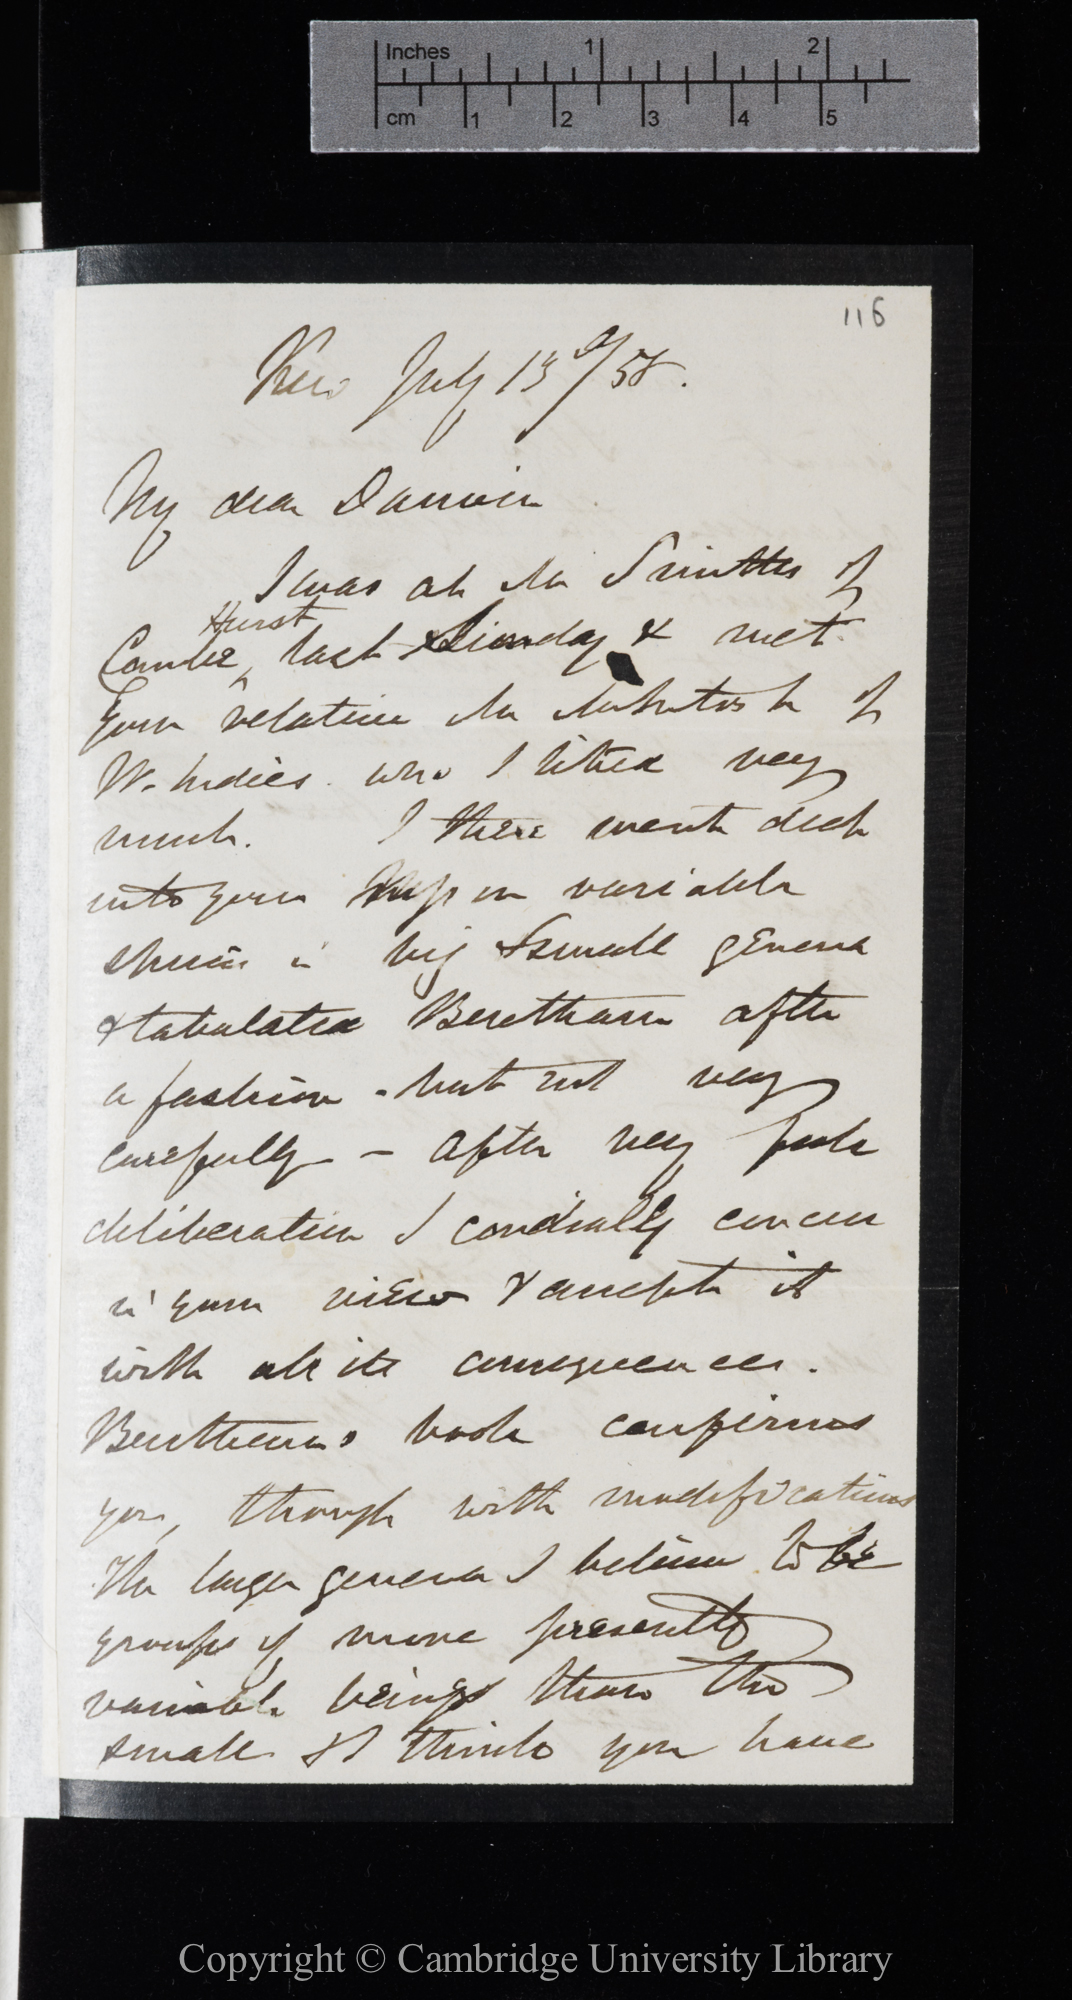 Letter from J. D. Hooker to C. R. Darwin   13-15 July 1858